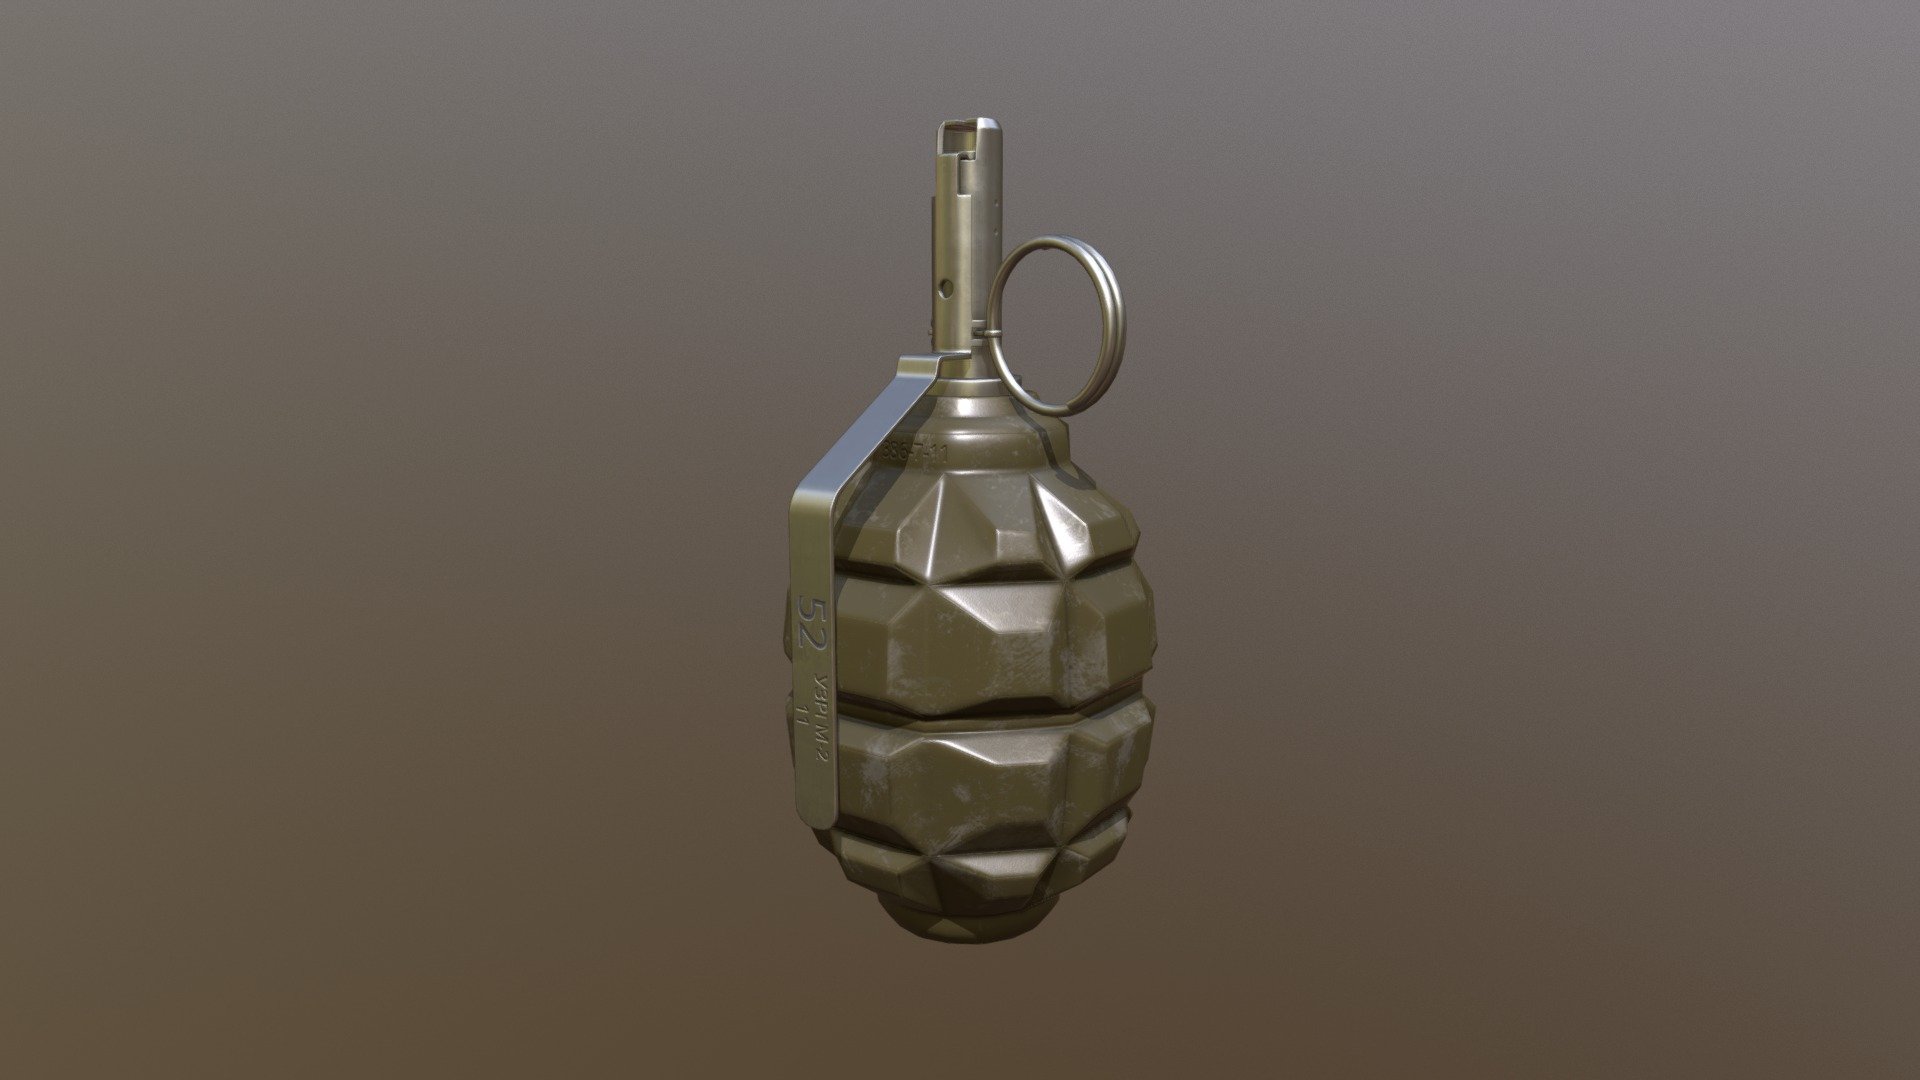 Russian F1 Hand Grenade "Limonka"